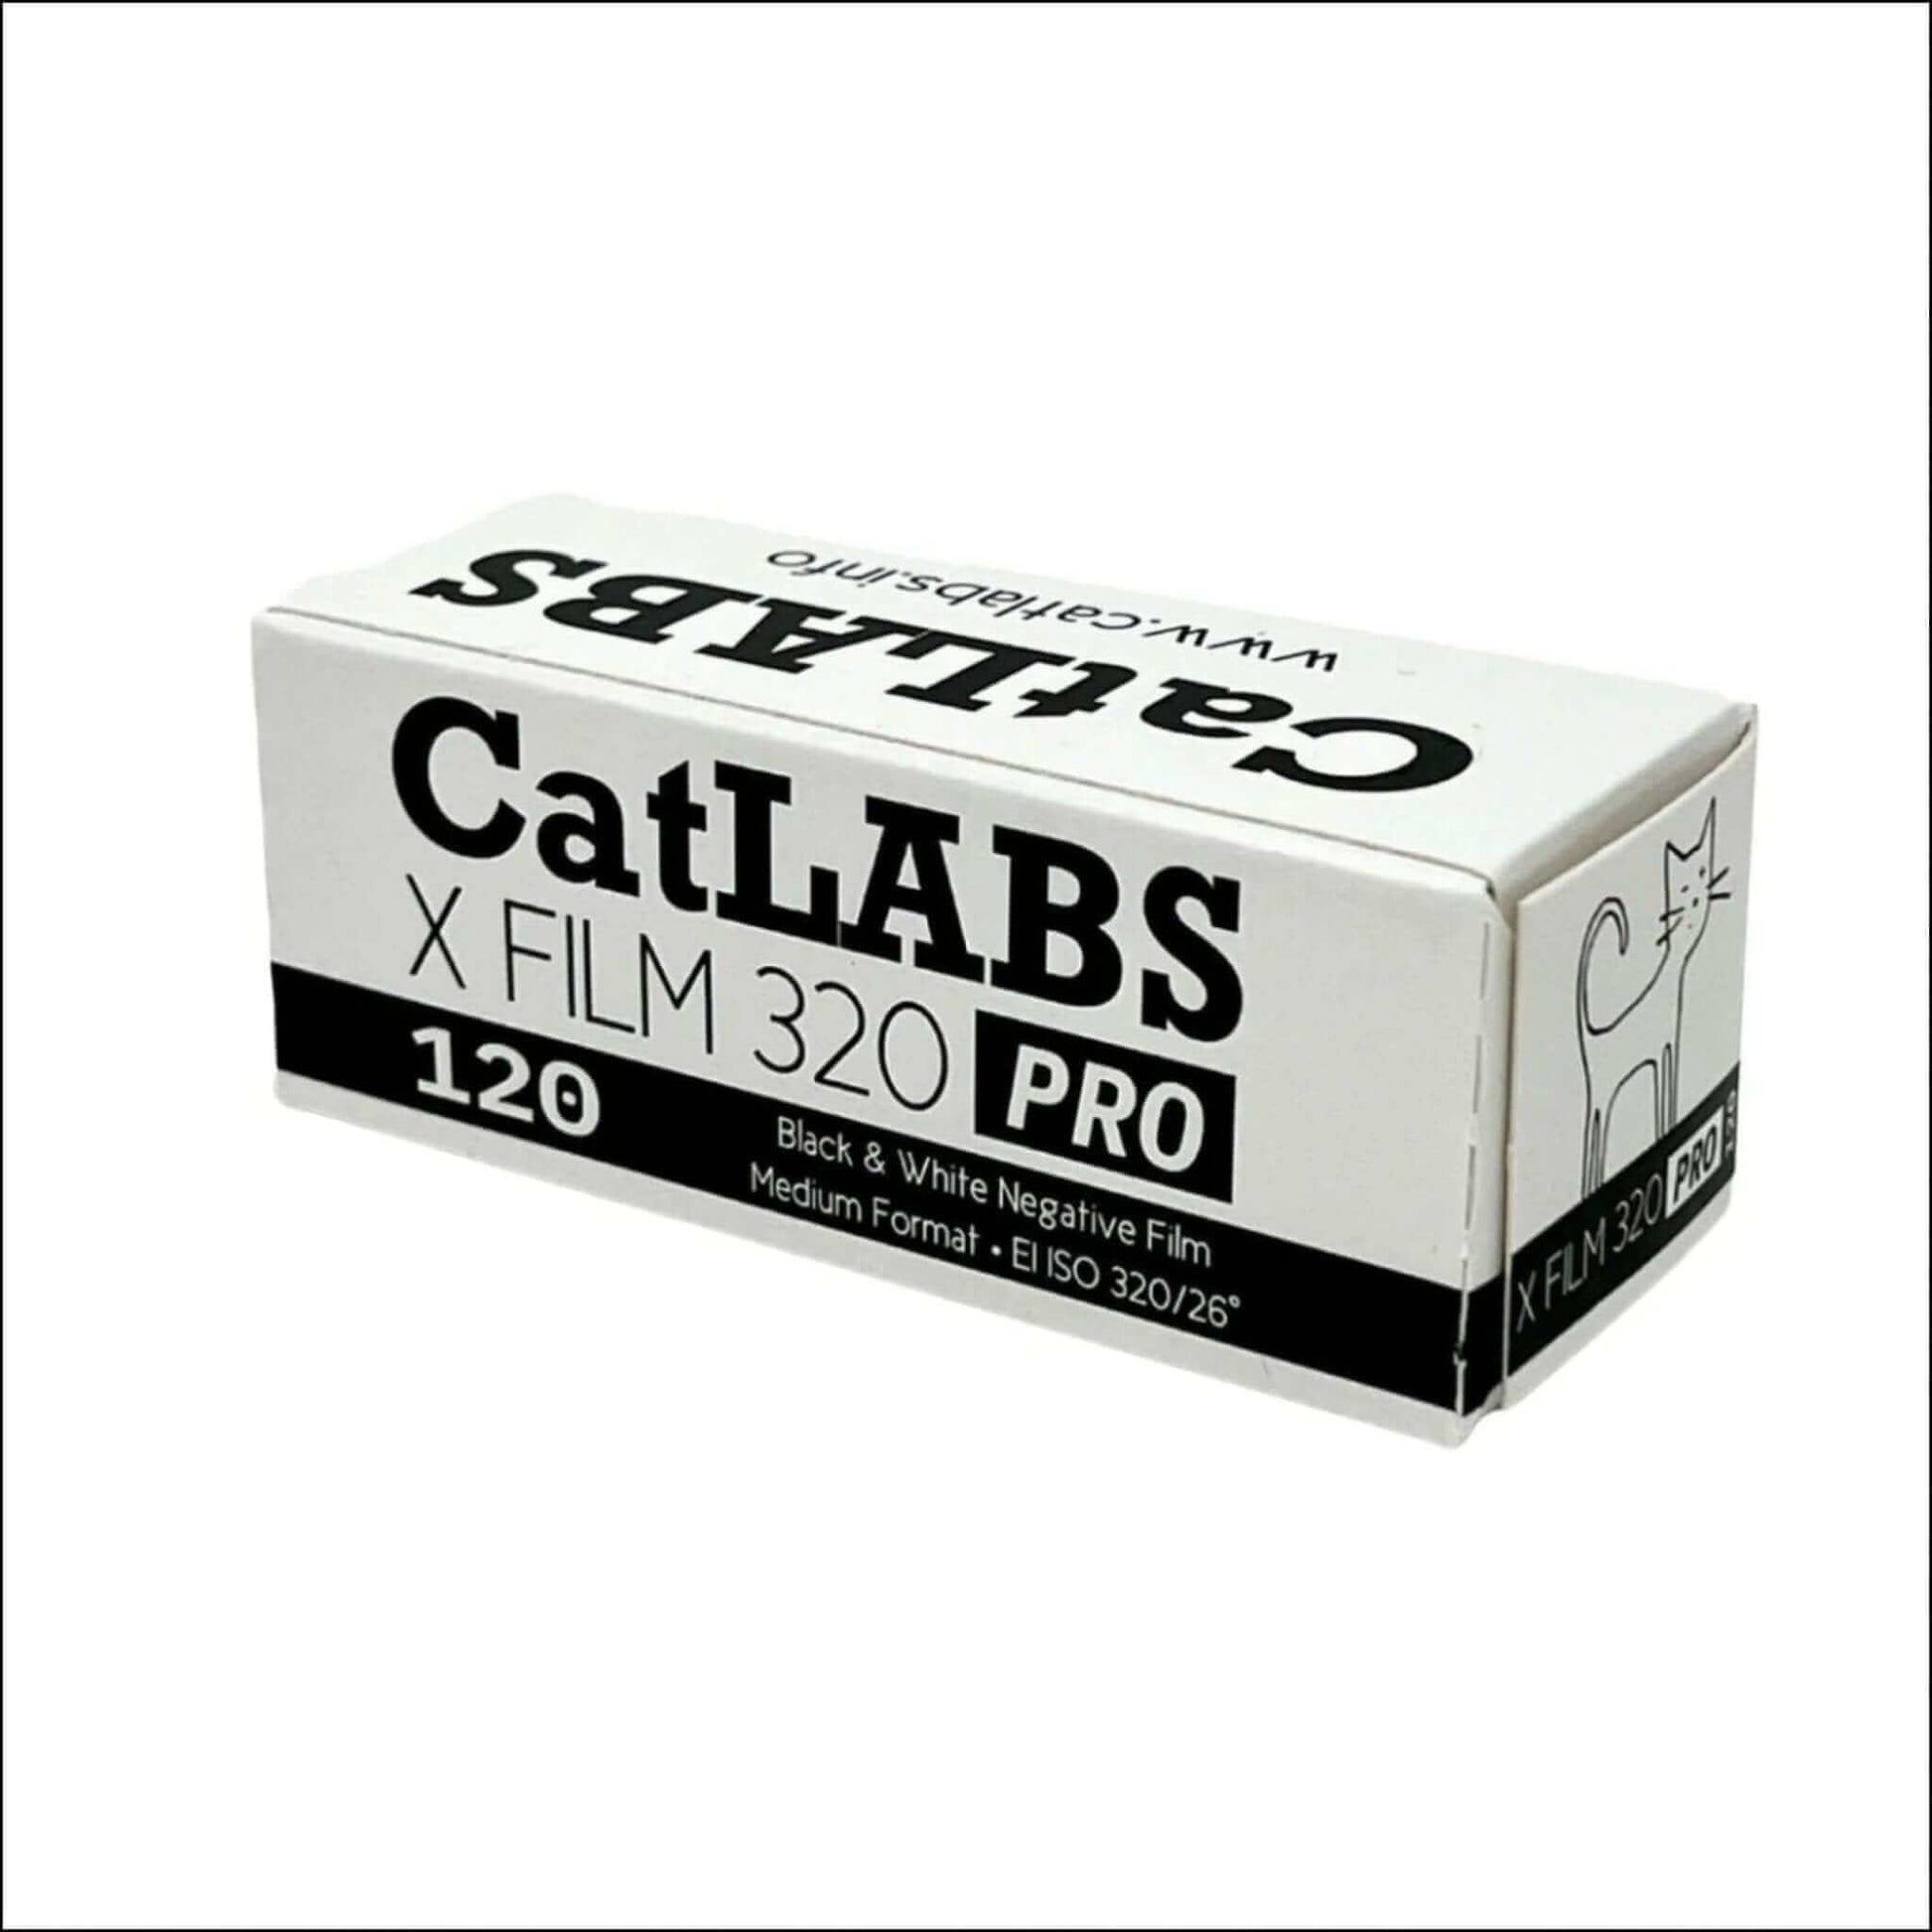 Catlabs x Film 320 Pro Bw 120 Medium Format Film